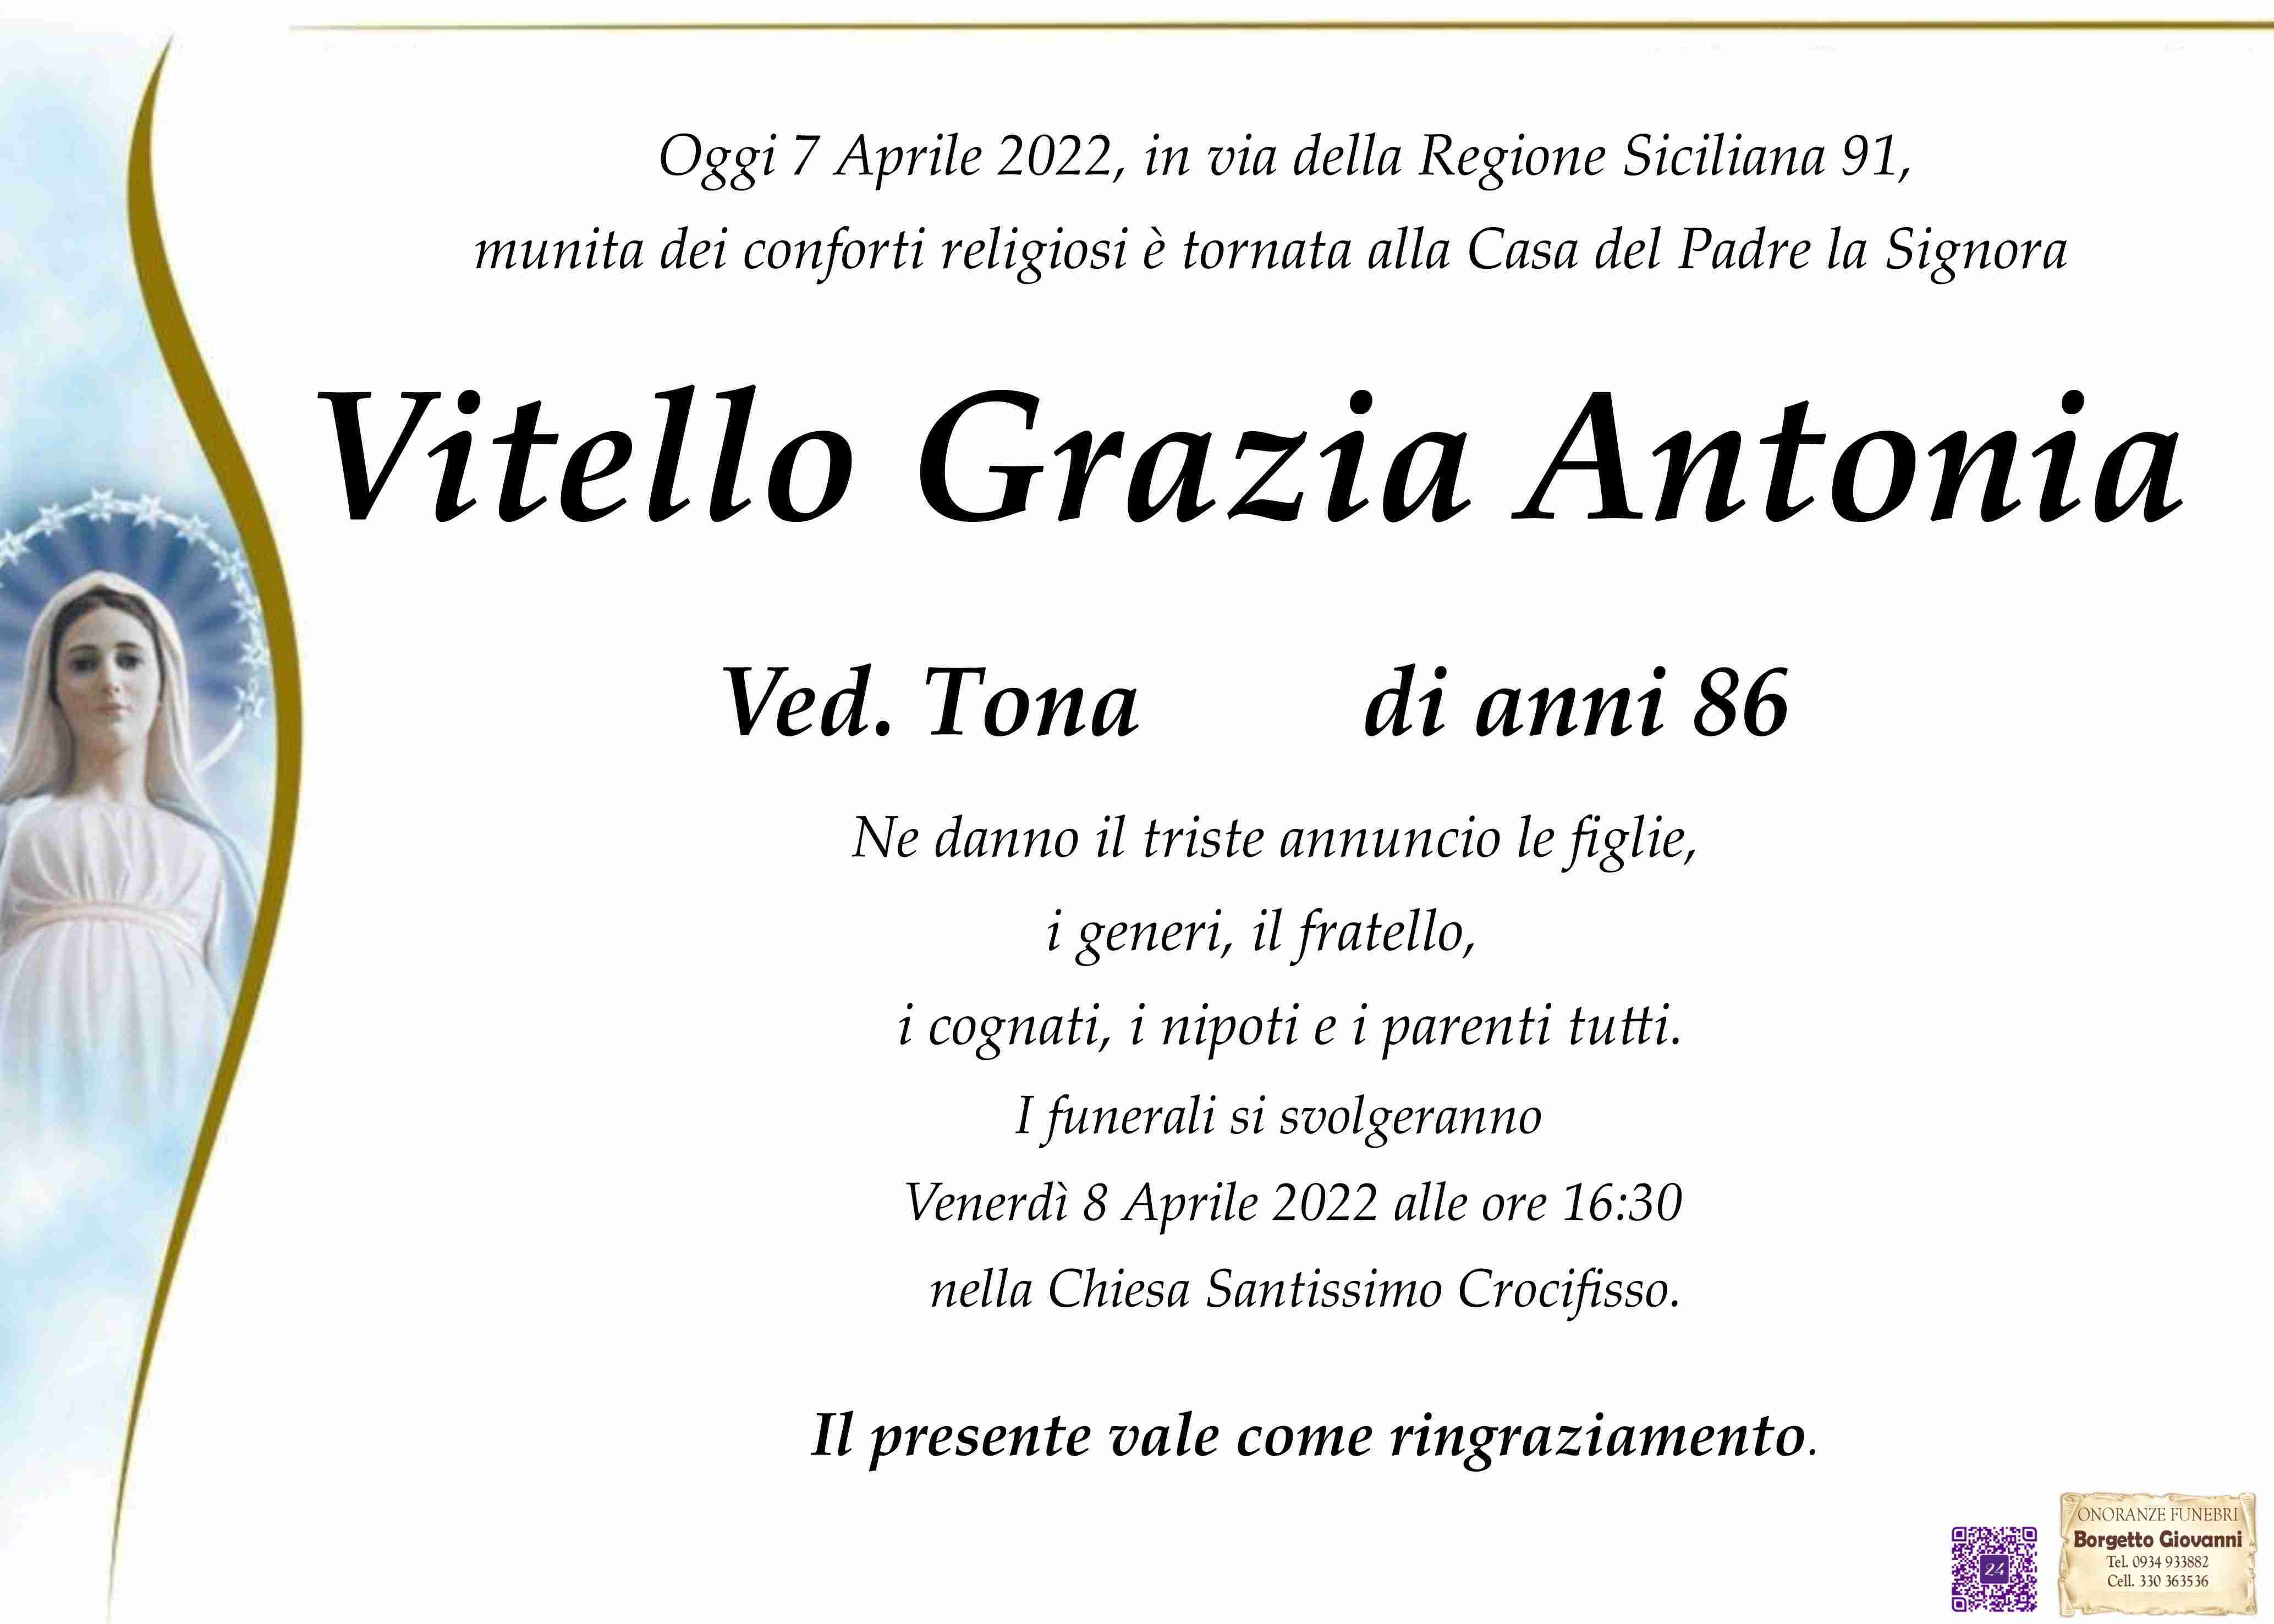 Grazia Antonia Vitello